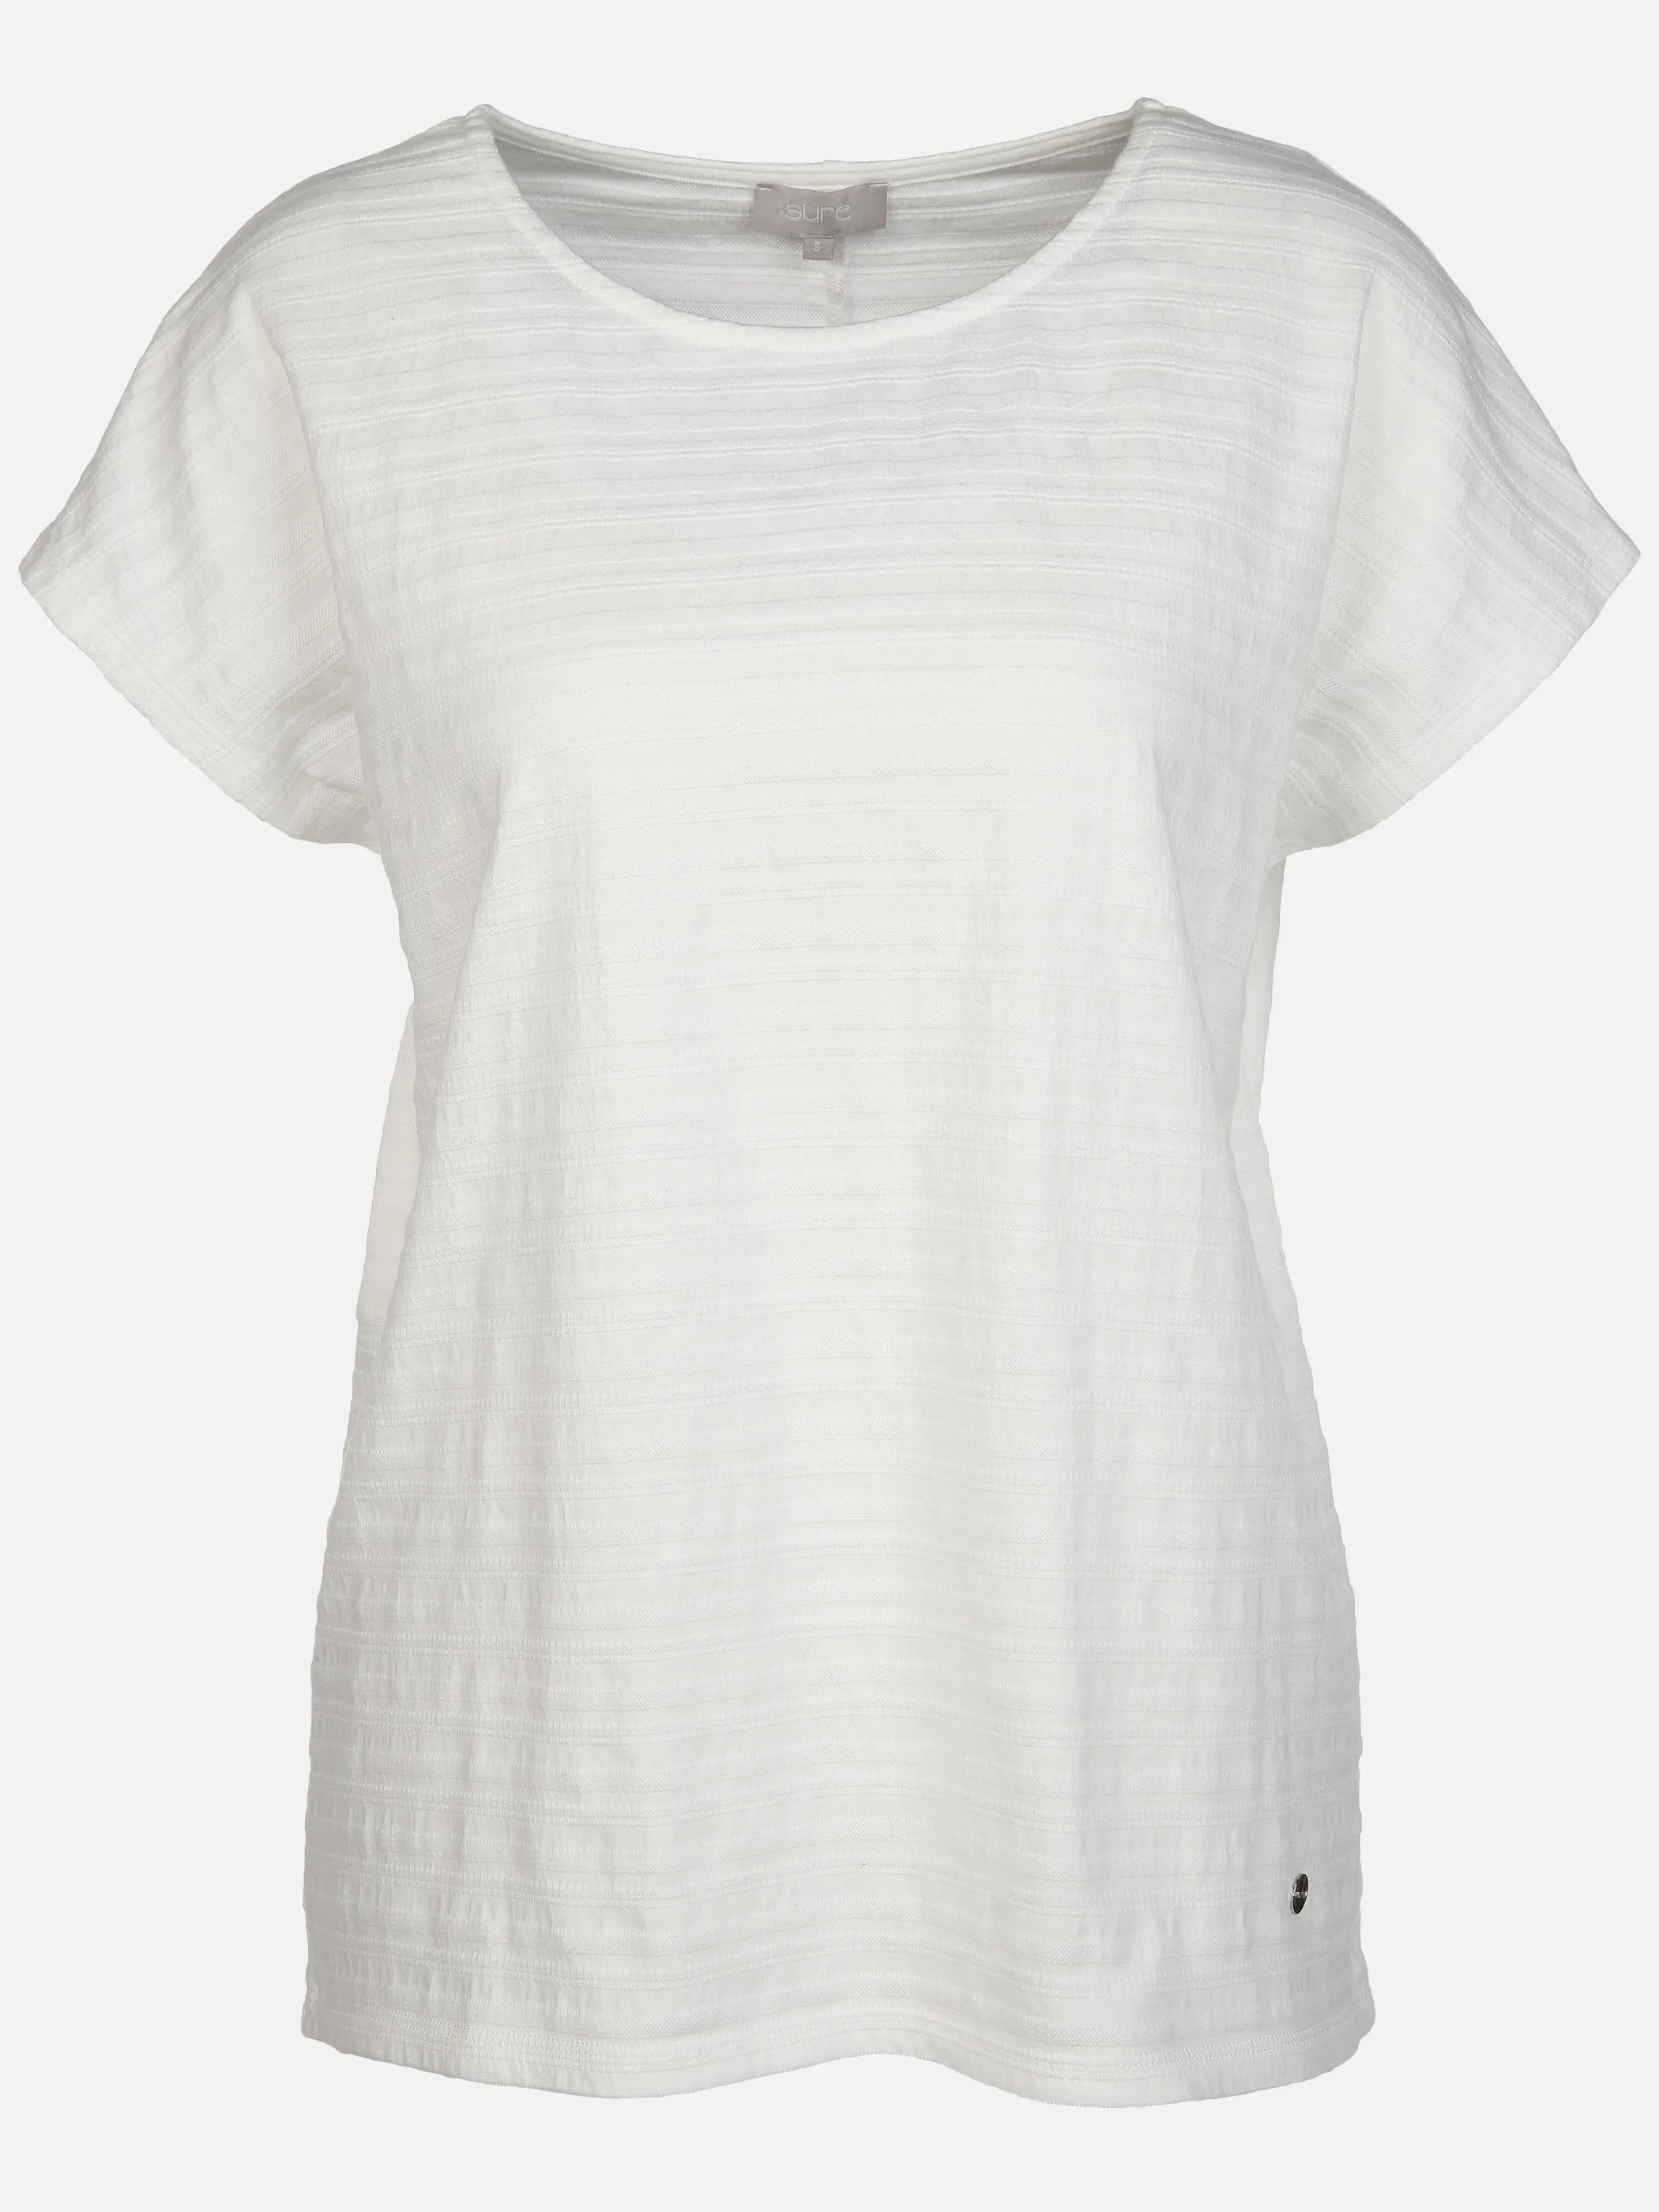 Sure Da-Struktur-Jacquard-Shirt Weiß 890104 OFFWHITE 1